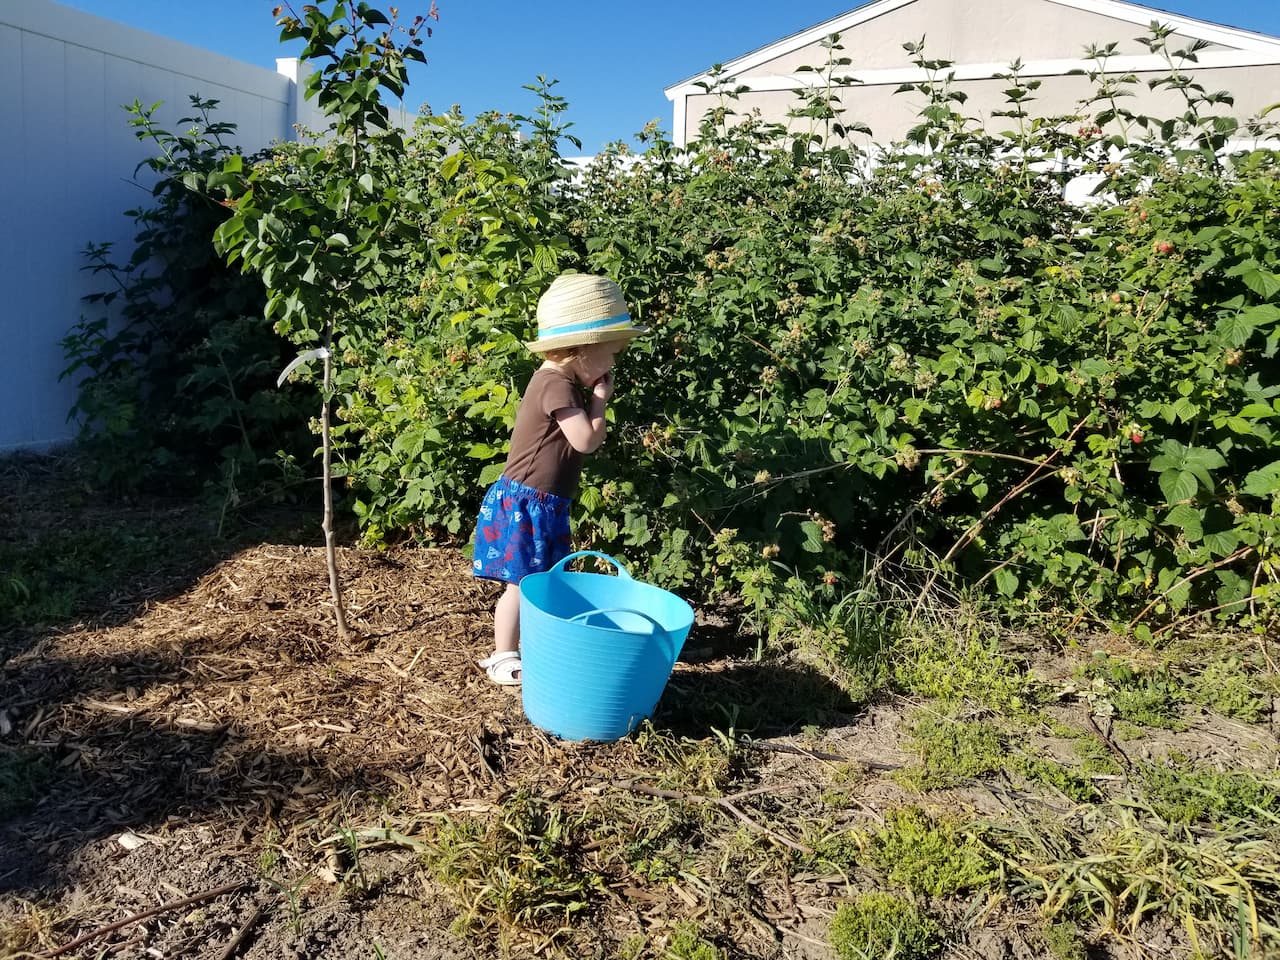 An image of a little girl picking fresh raspberries in the garden.